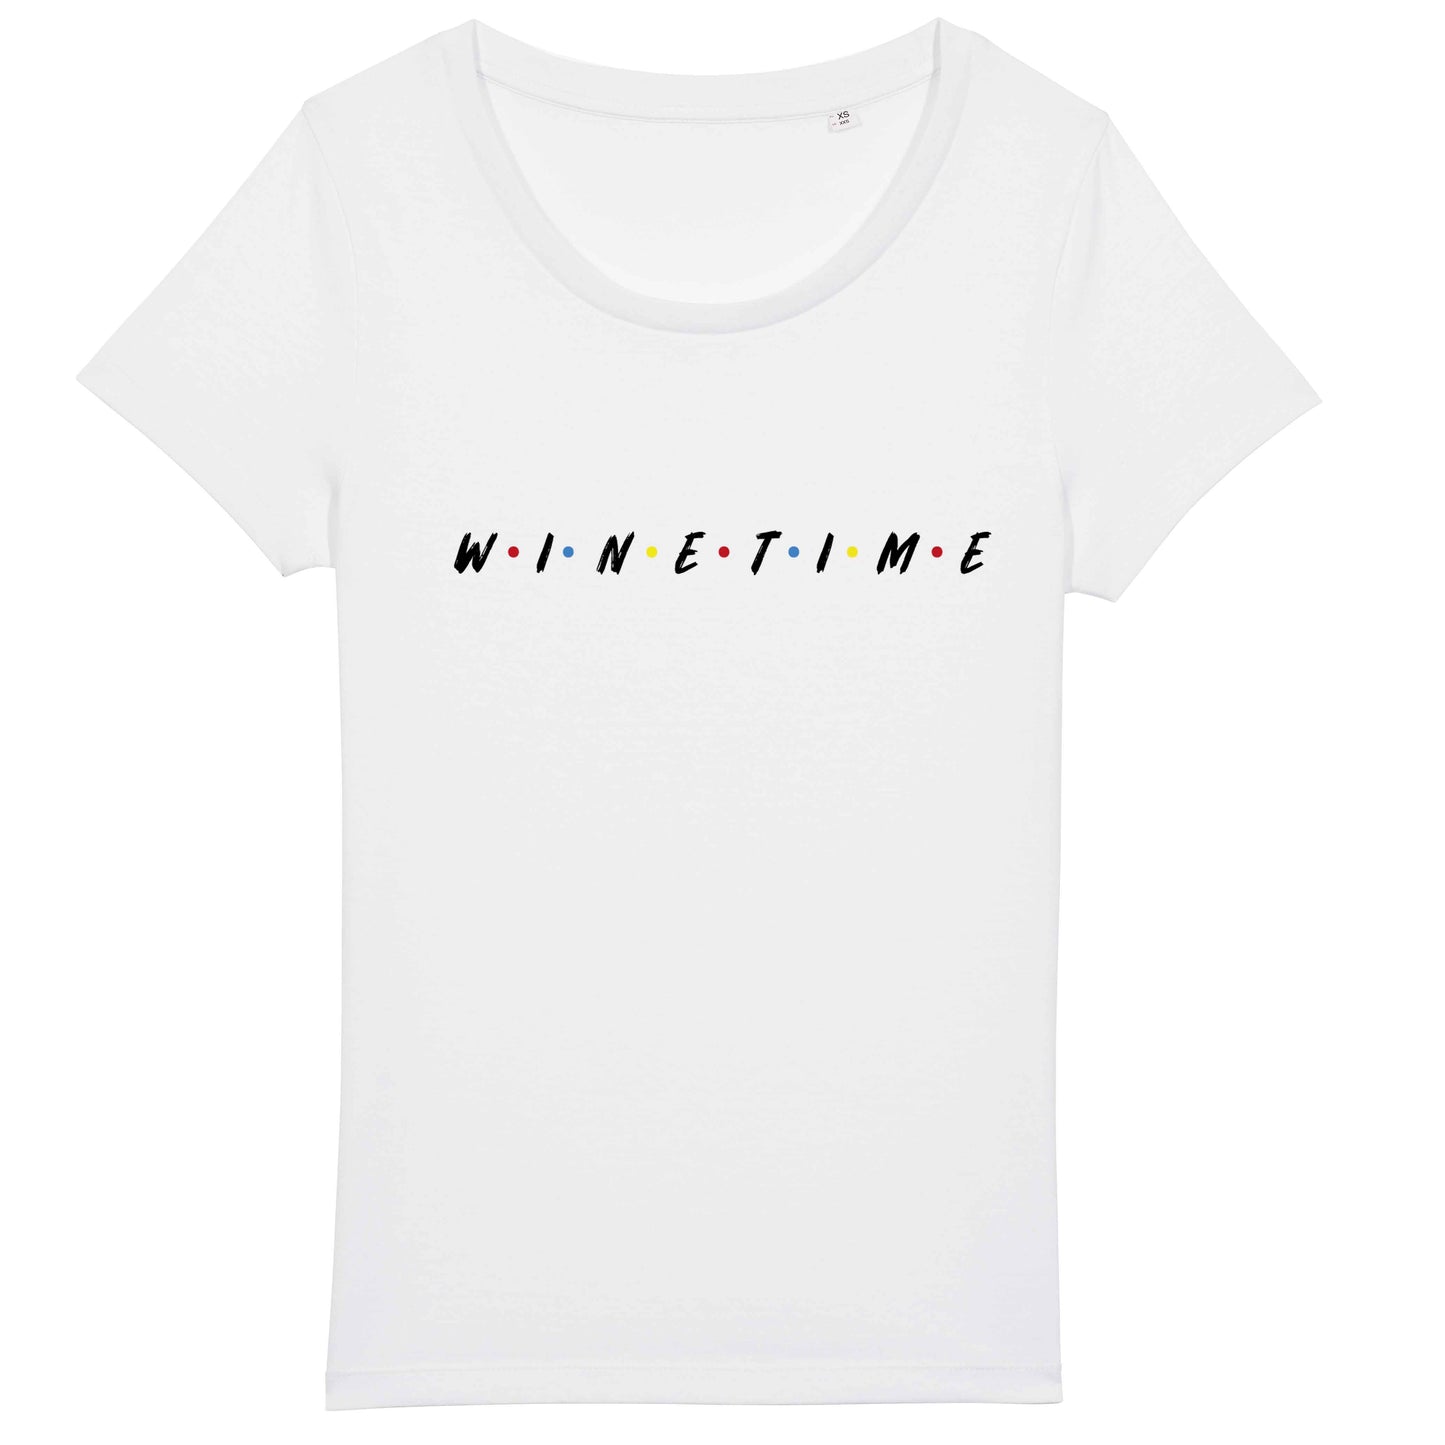 Winetime  - Damen Organic Shirt